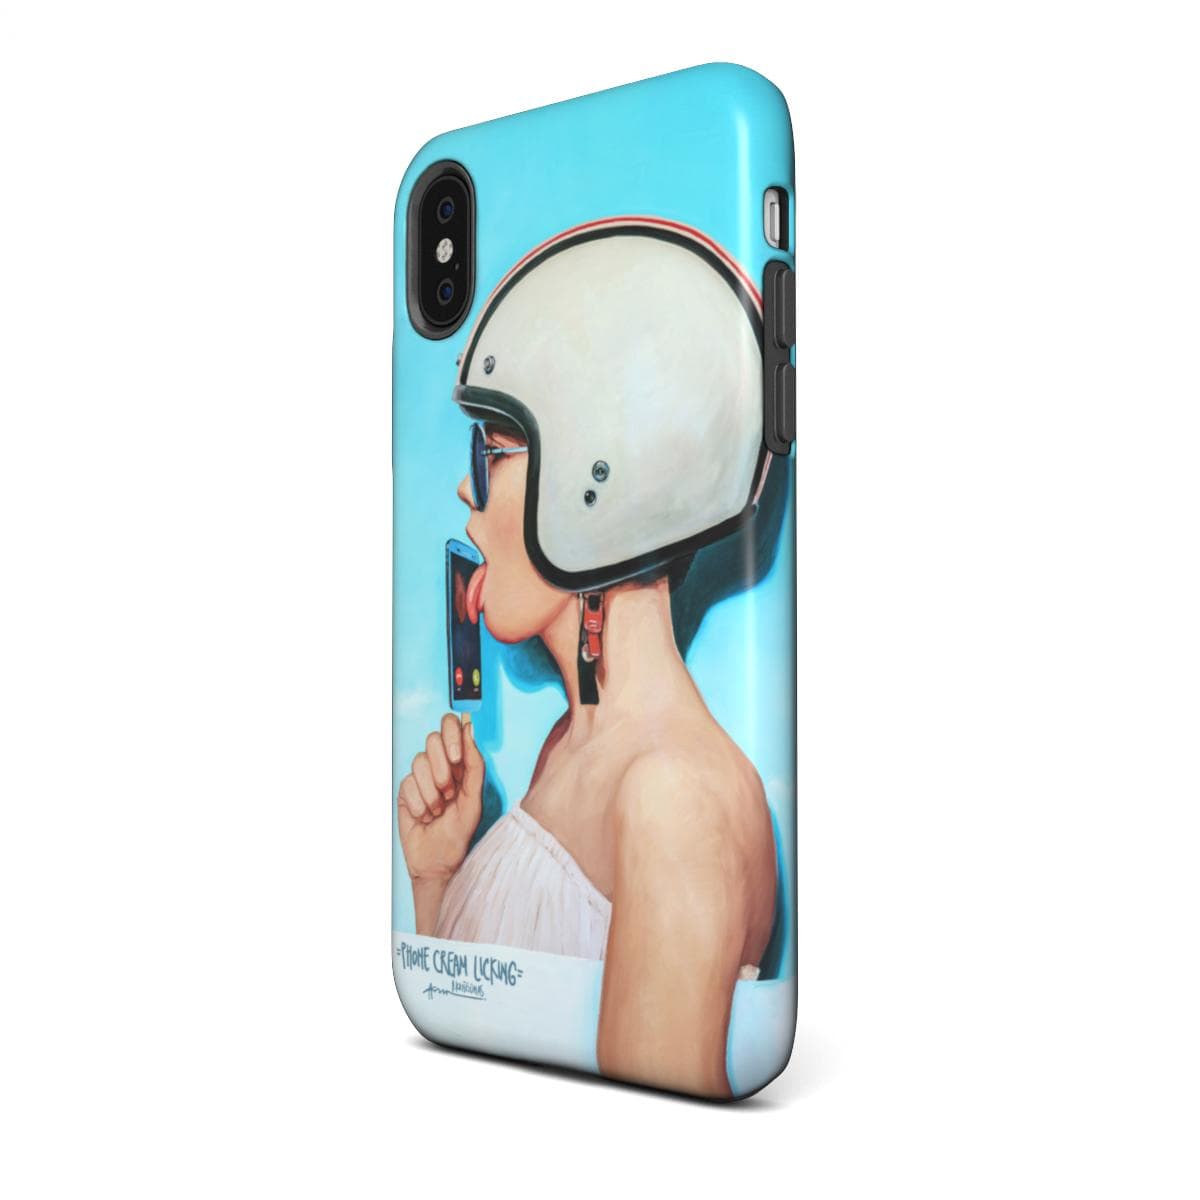 Happy365 Tech Accessories Phone Cream Licking